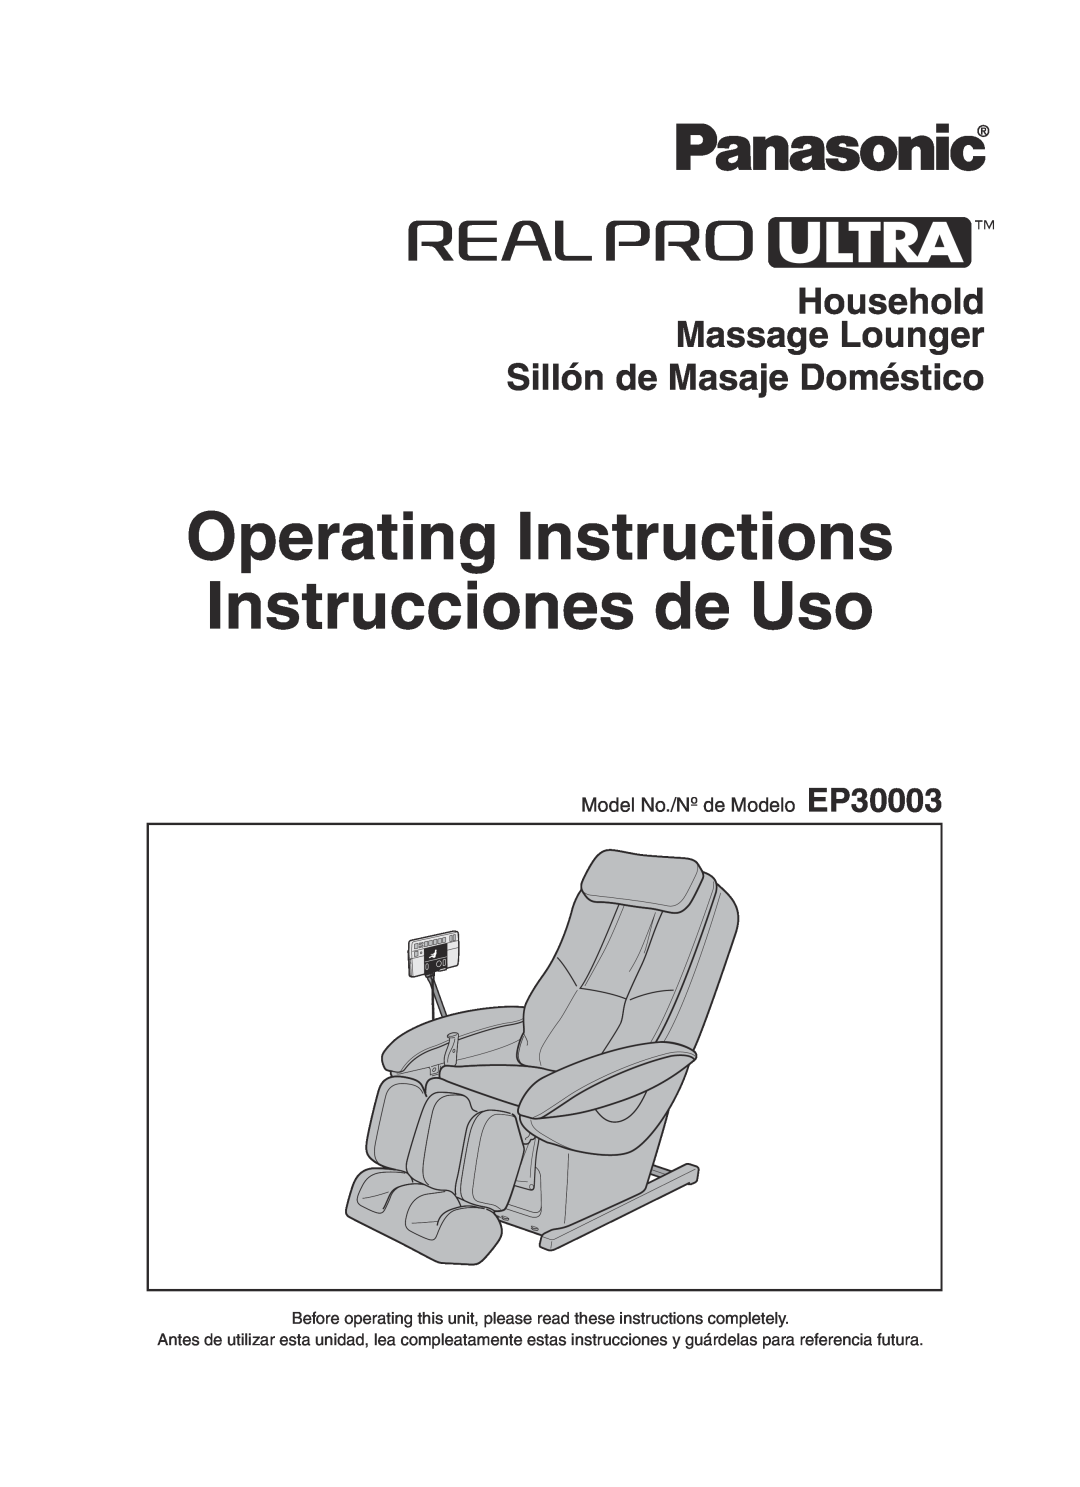 Panasonic manual Model No./Nº de Modelo EP30003, Operating Instructions Instrucciones de Uso, Household Massage Lounger 